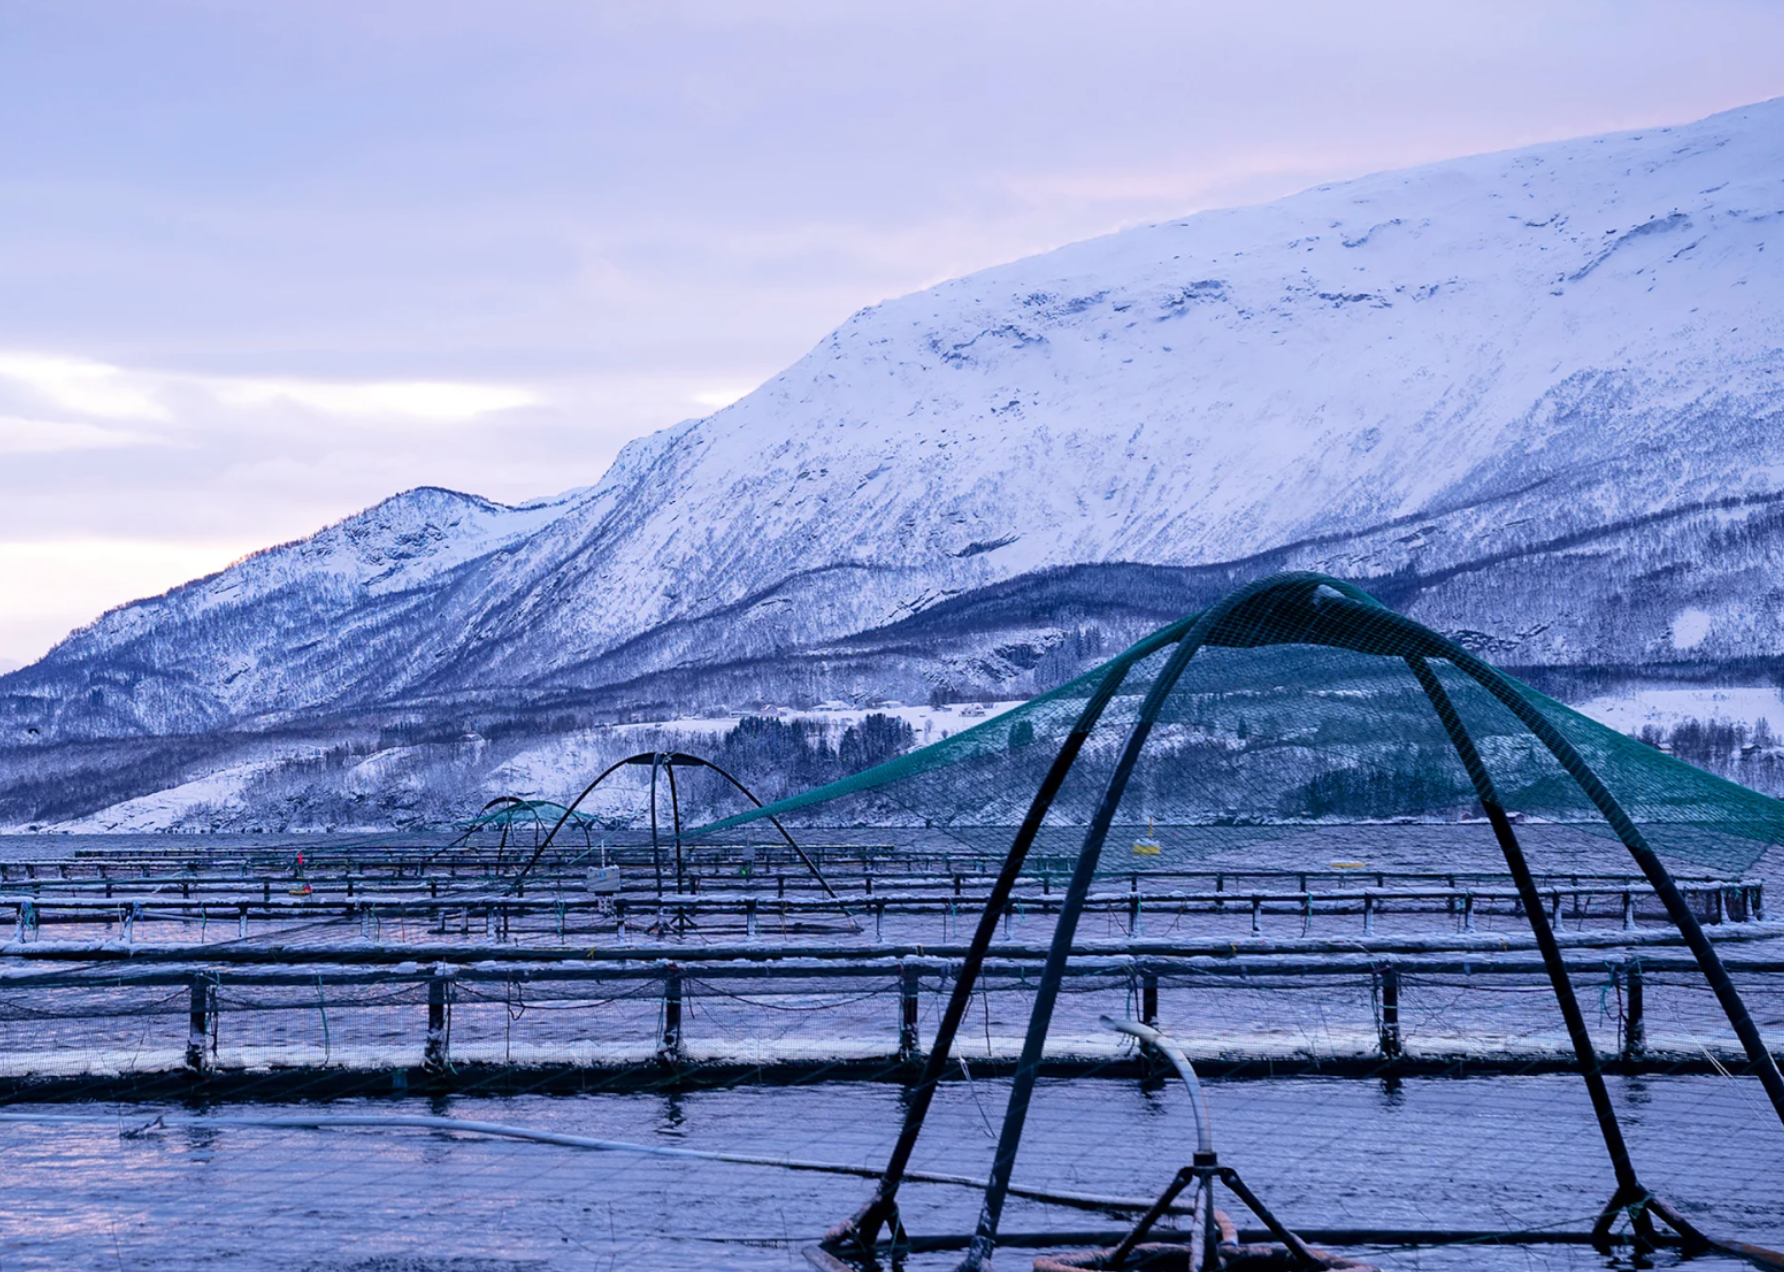 Aquaculture pens in Norway